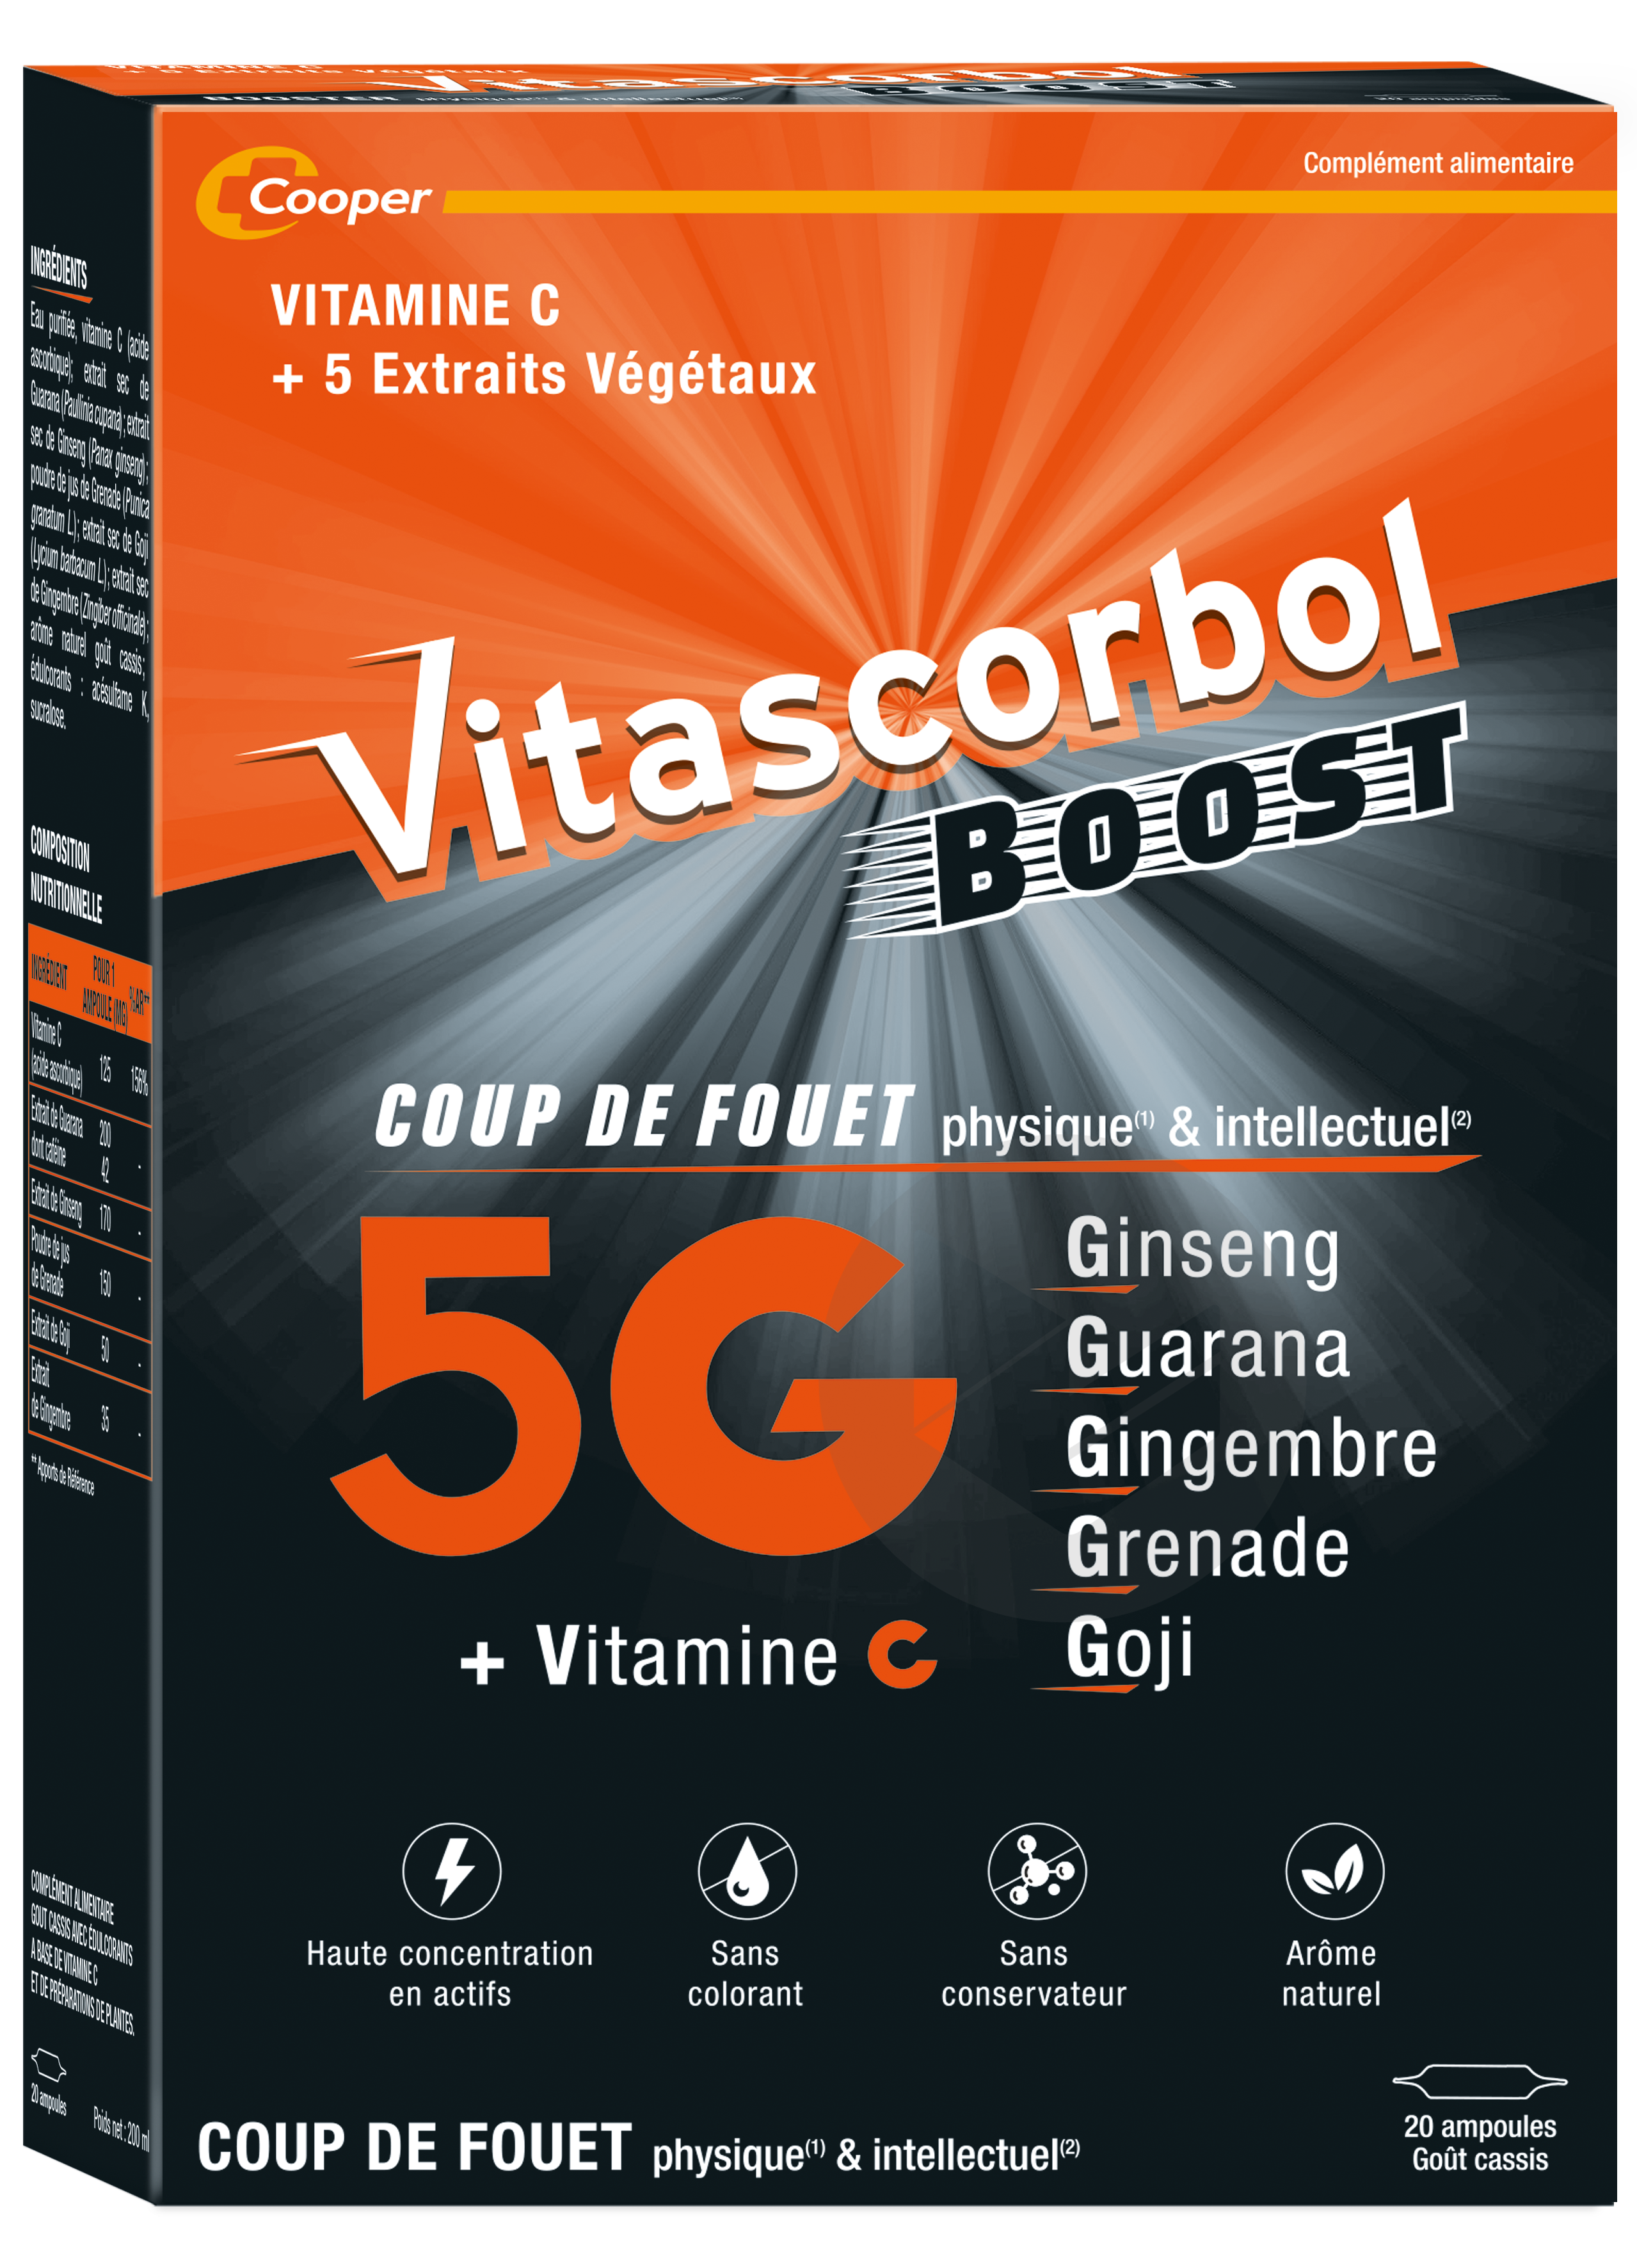 Vitascorbol Boost 5G